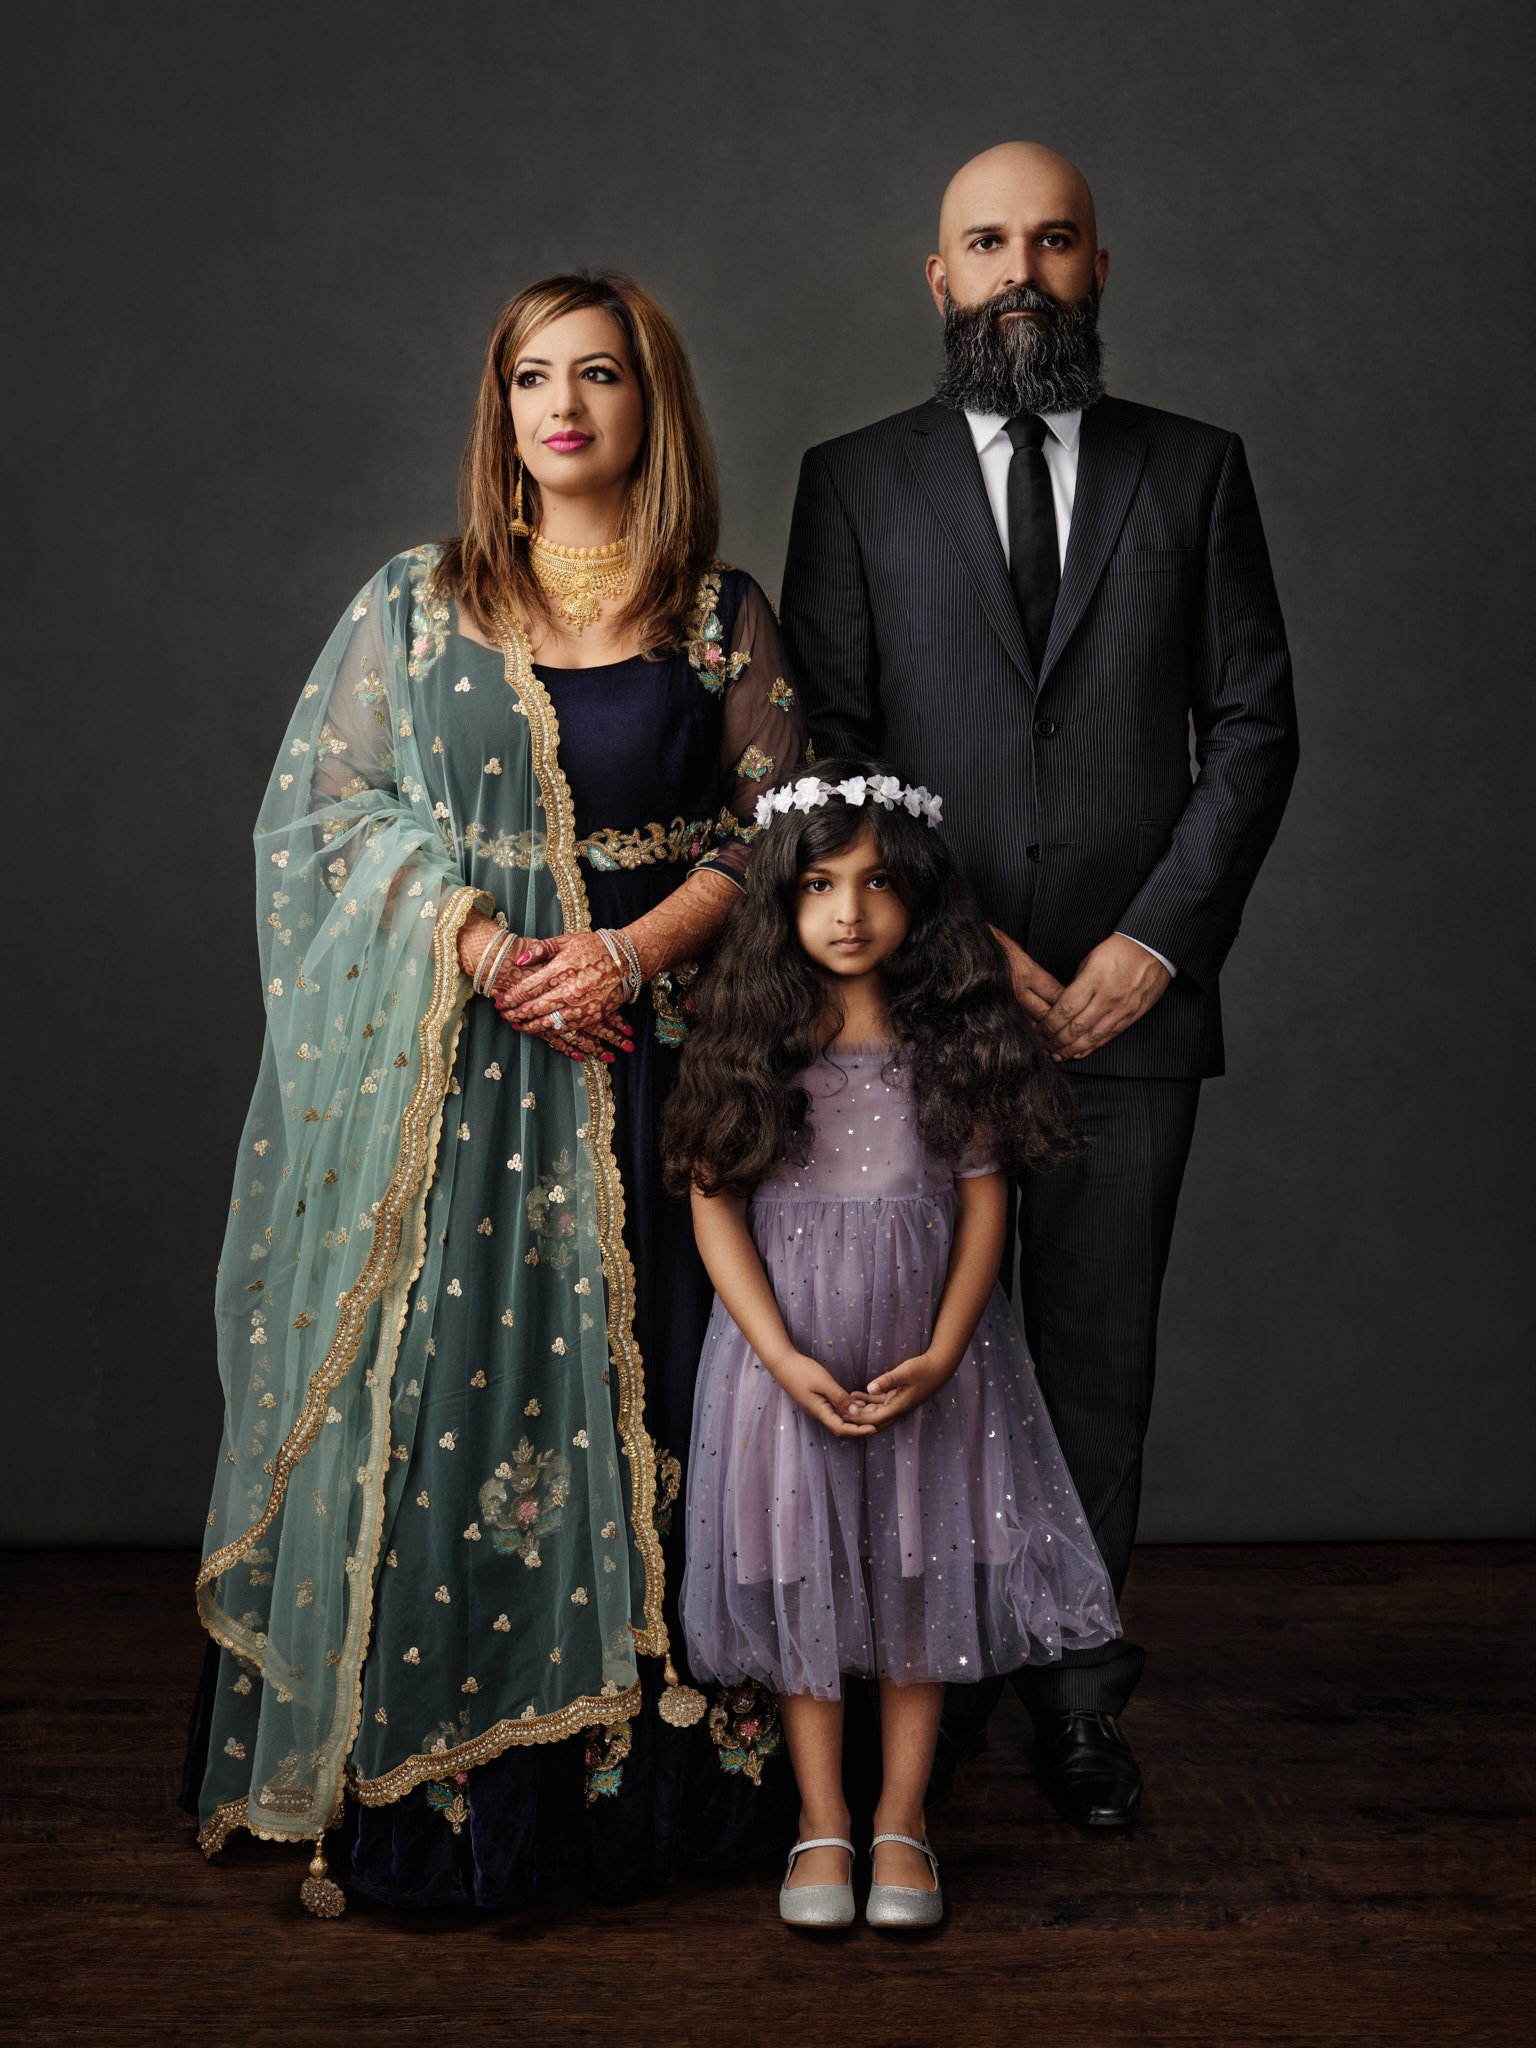 https://images.squarespace-cdn.com/content/v1/5c336783f2e6b11a9d3b5693/1656874717323-CHZCPMDP5MCMUW7ASS2R/indian-family-wedding-portrait-photographer-vancouver.jpg